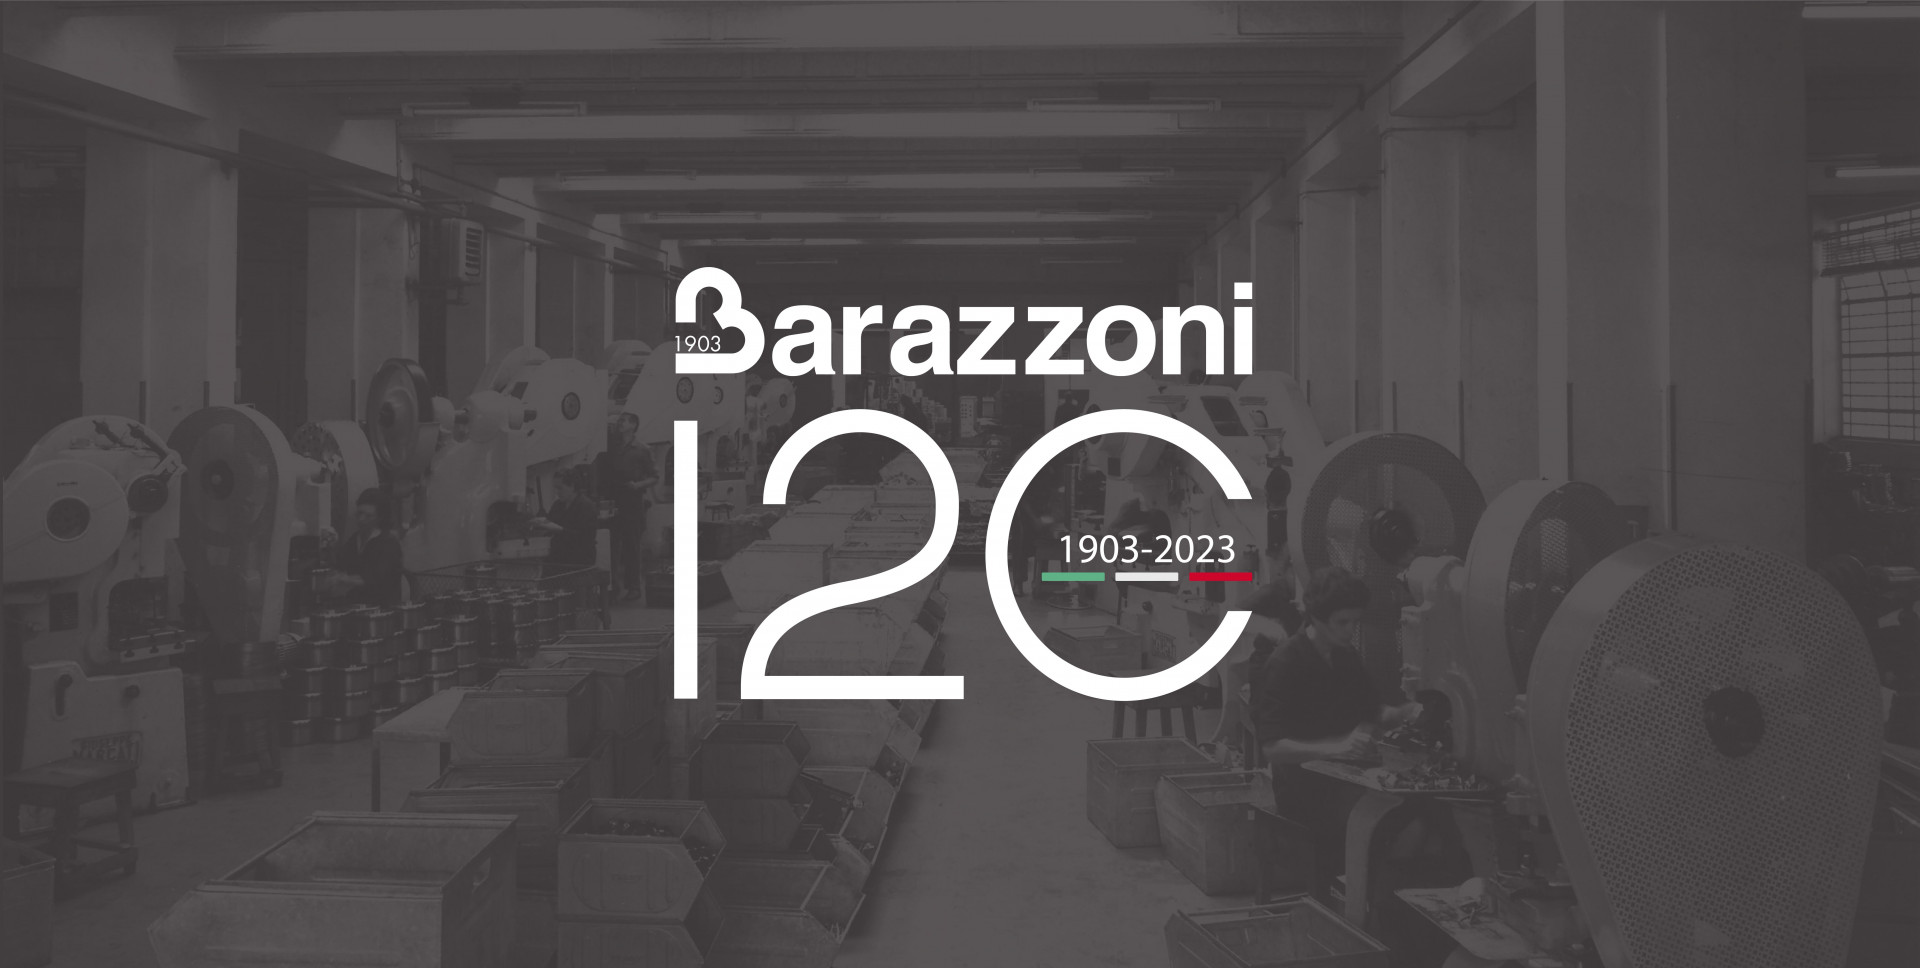  Barazzoni_120 anni.jpg